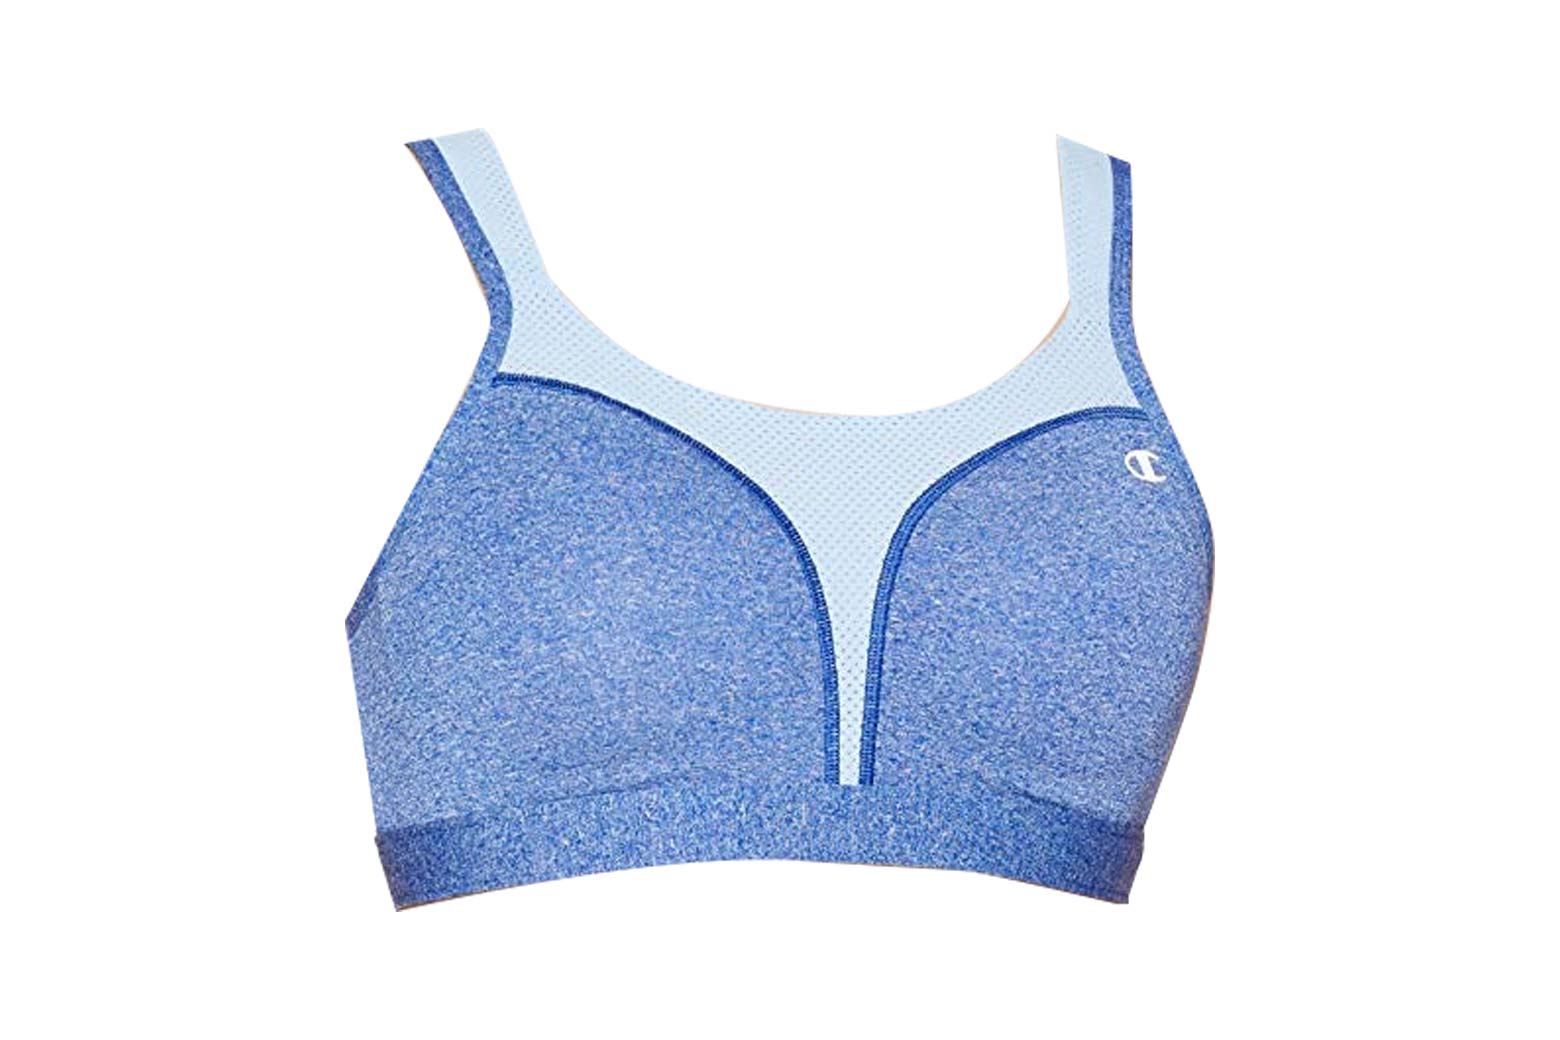 Champion sports bra, in blue.